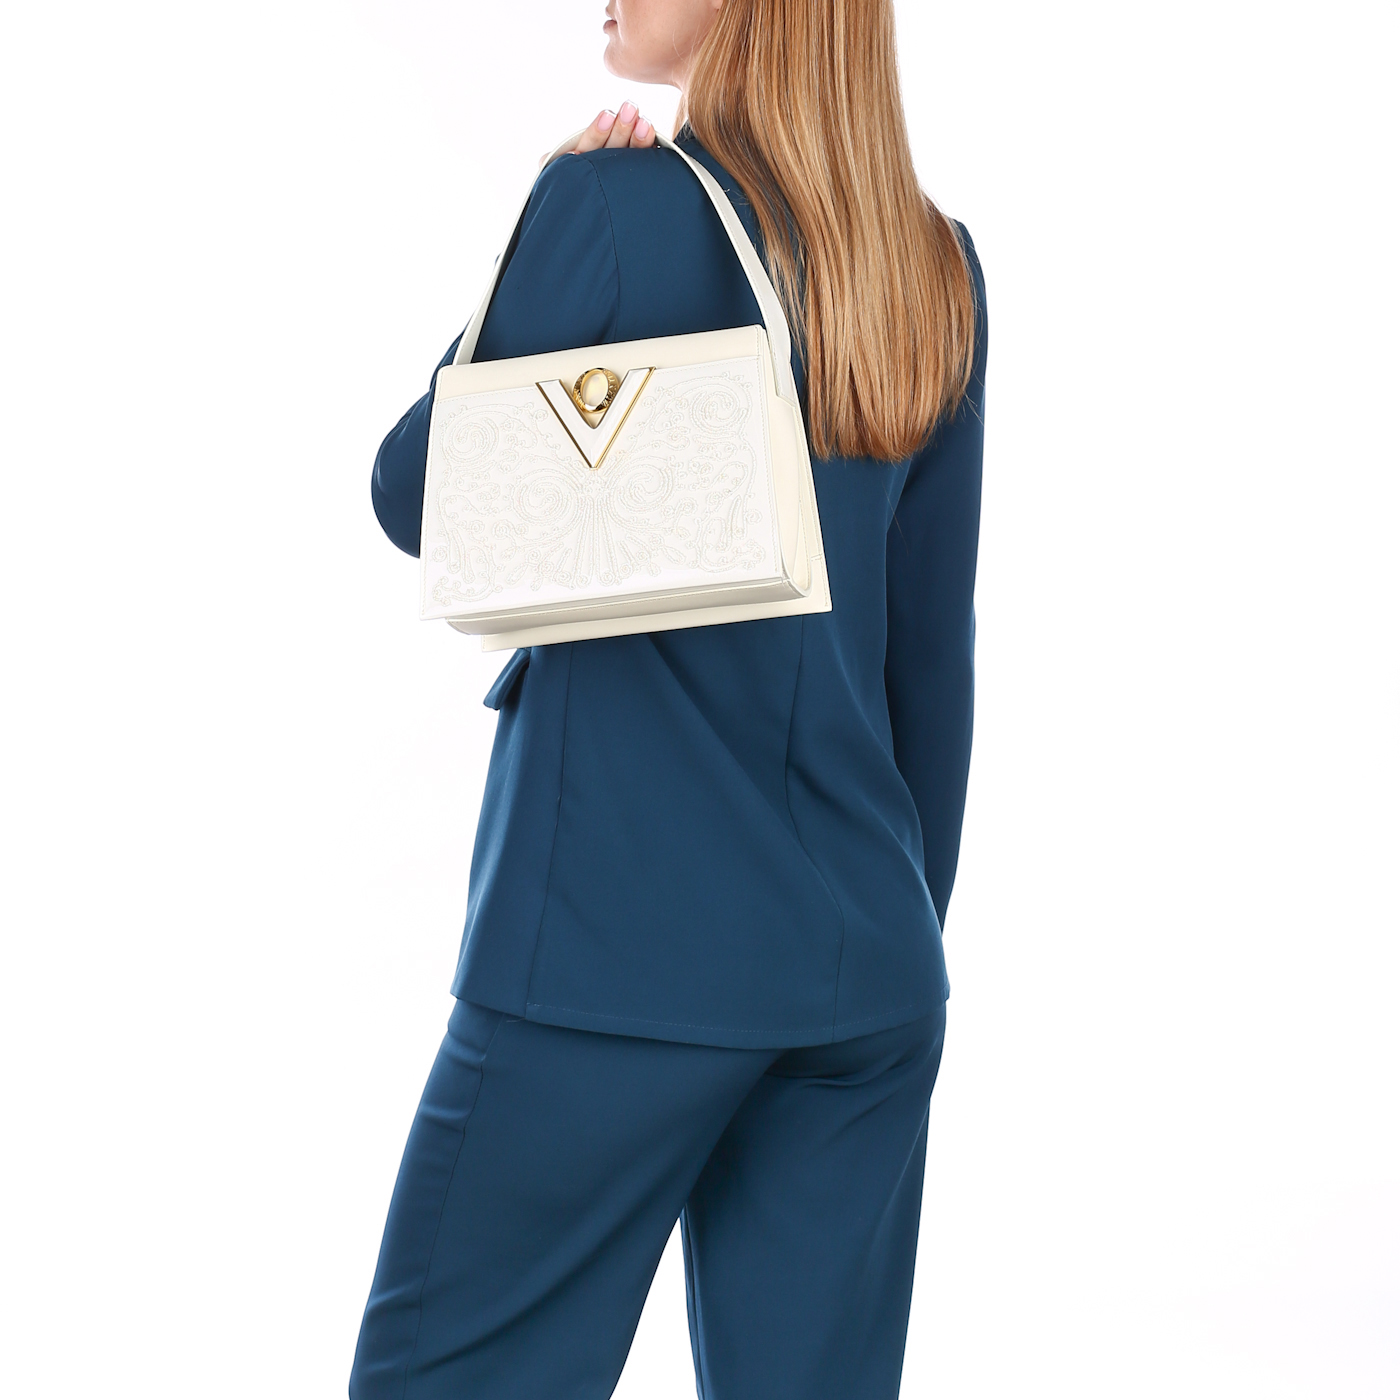 Кожаная сумка с вышивкой Valentino Orlandi Kara